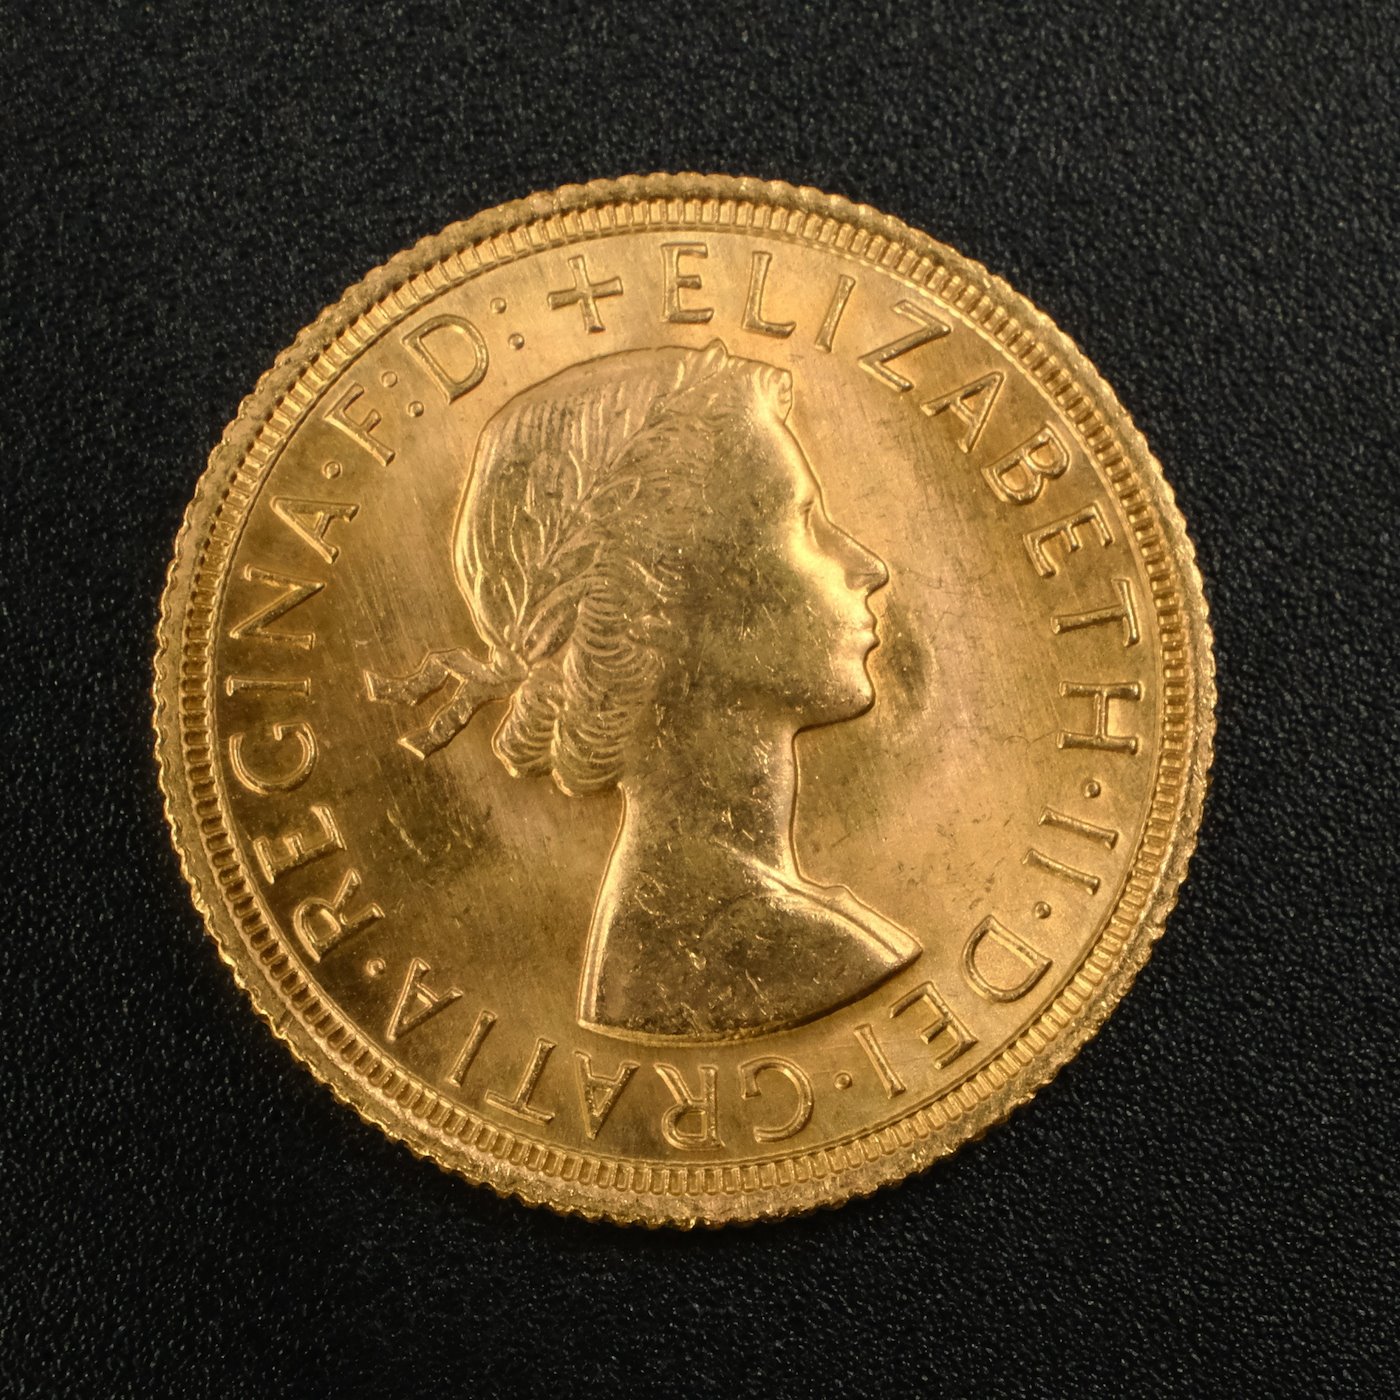 Mince - Velká Británie zlatý Sovereign 1966 ALŽBĚTA II., zlato 916,7/1000, hrubá hmotnost 7,99g !!!